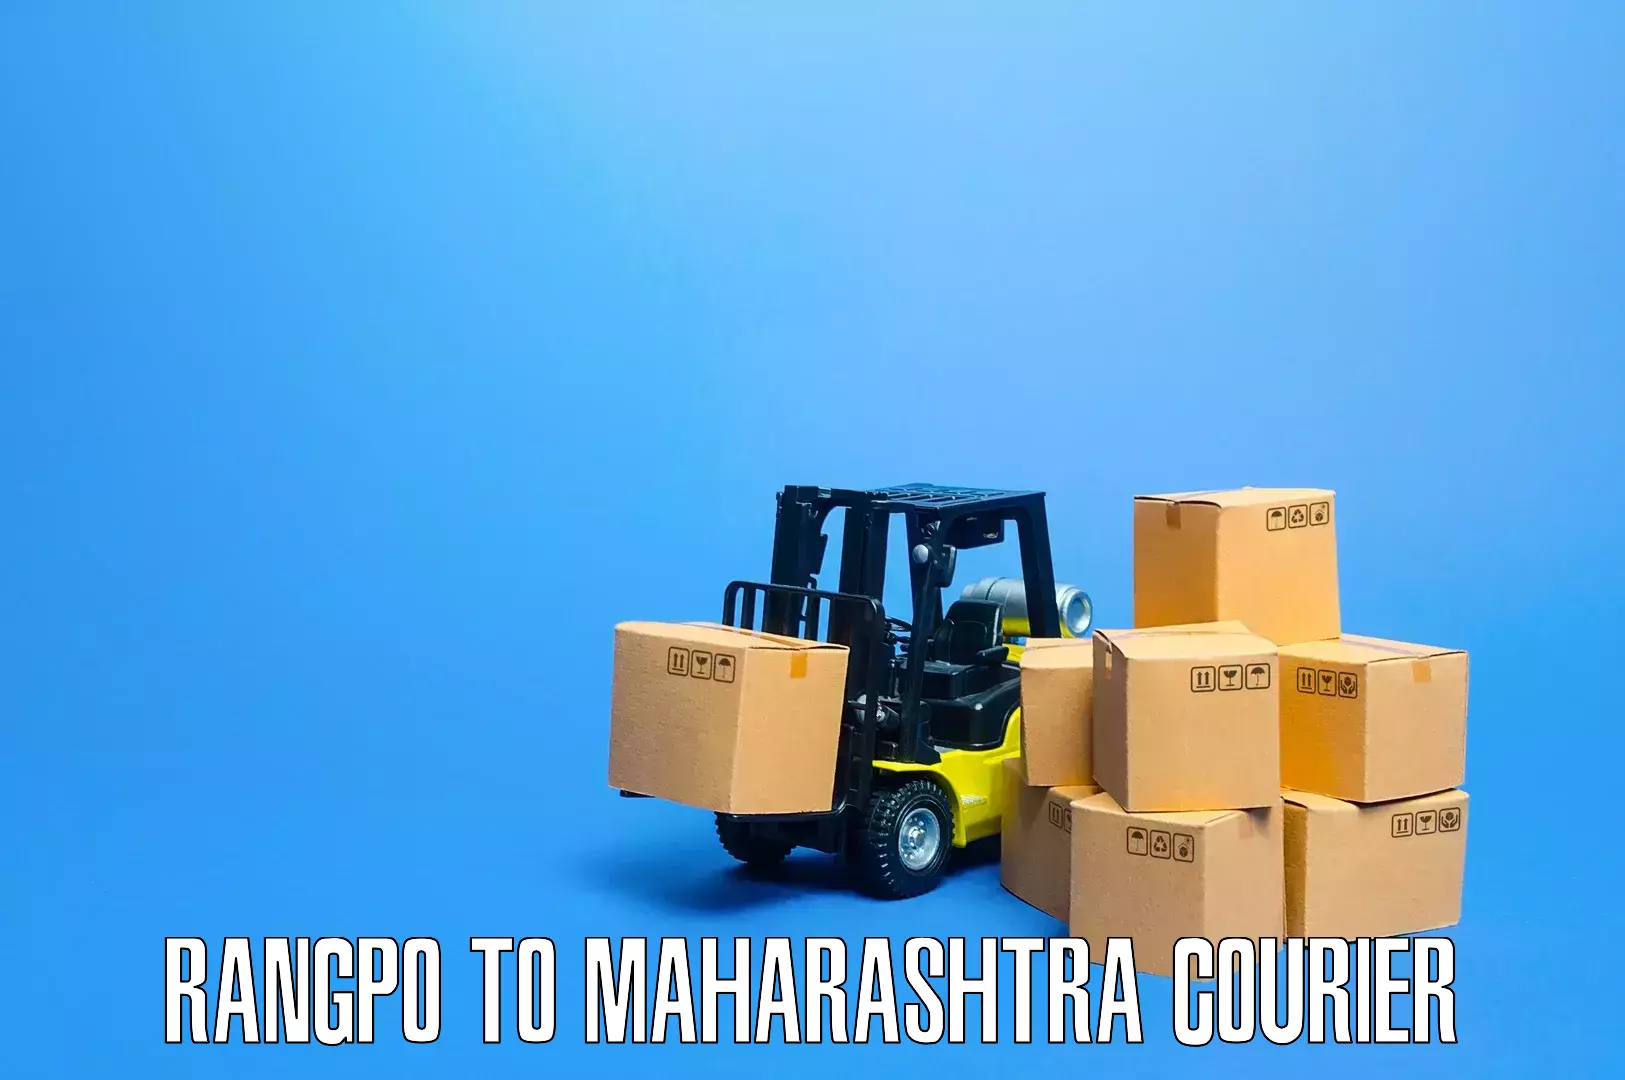 Affordable household movers Rangpo to Maharashtra